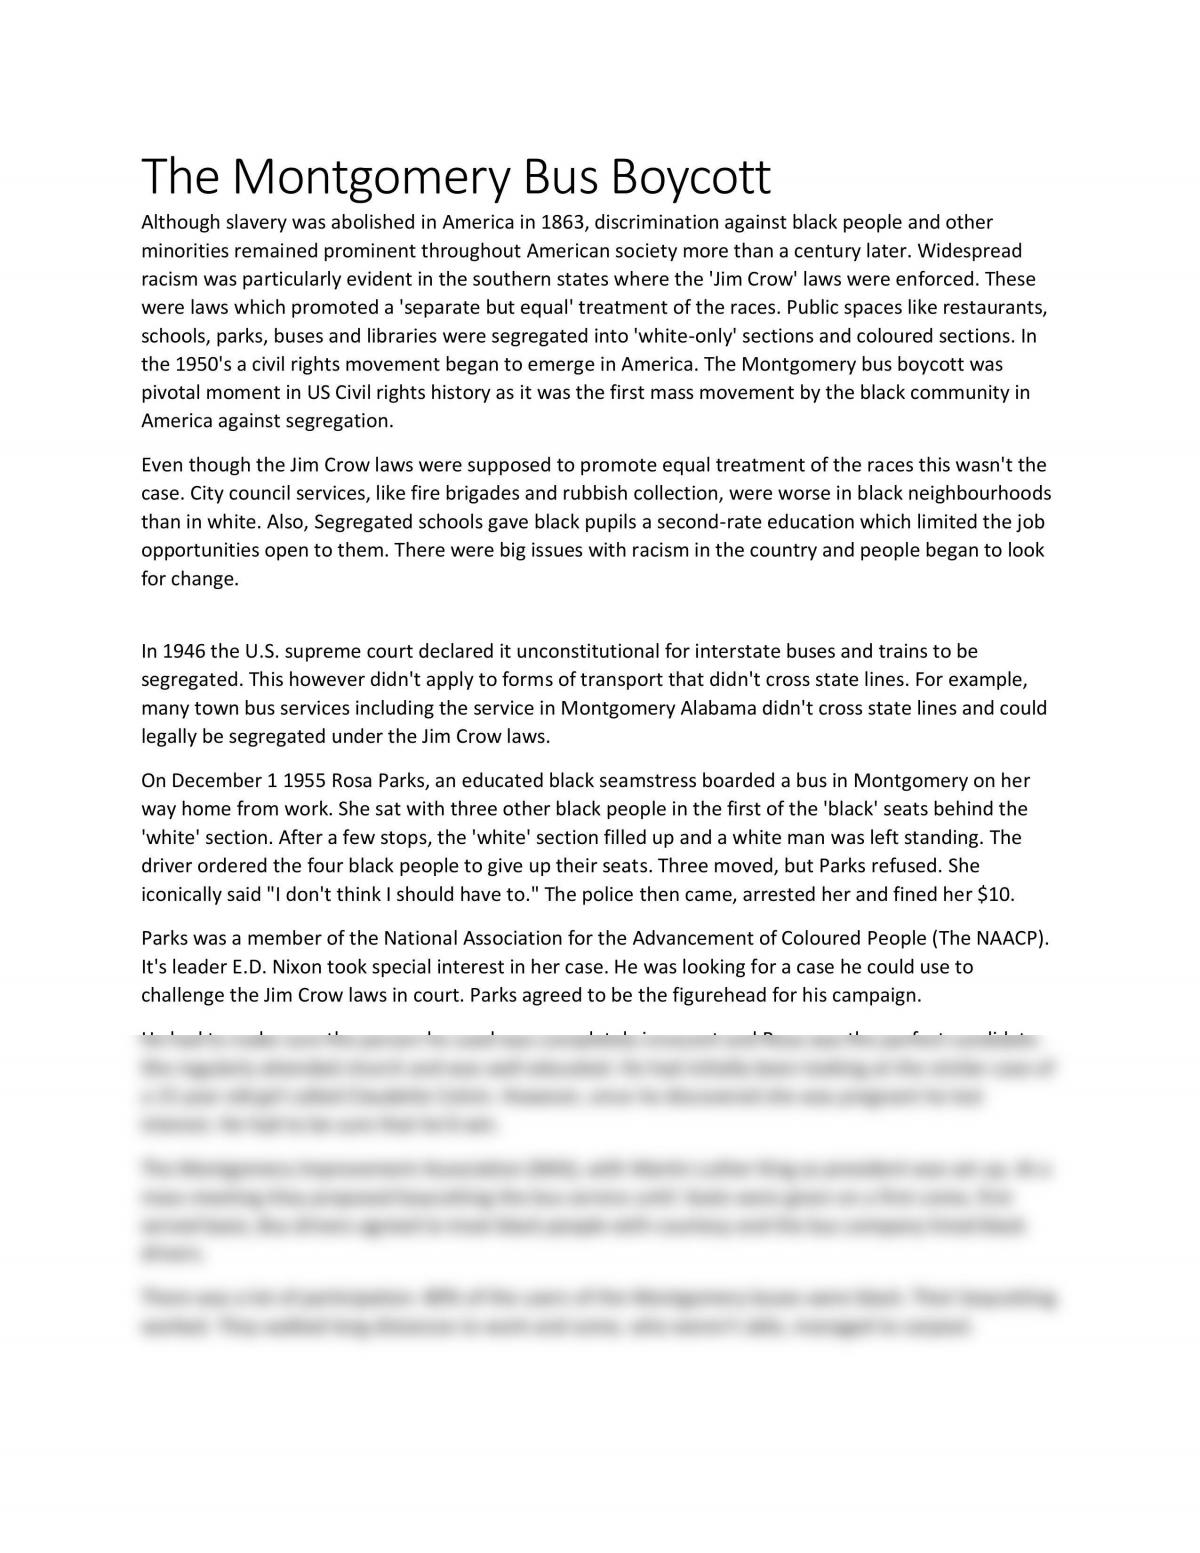 montgomery bus boycott essay questions